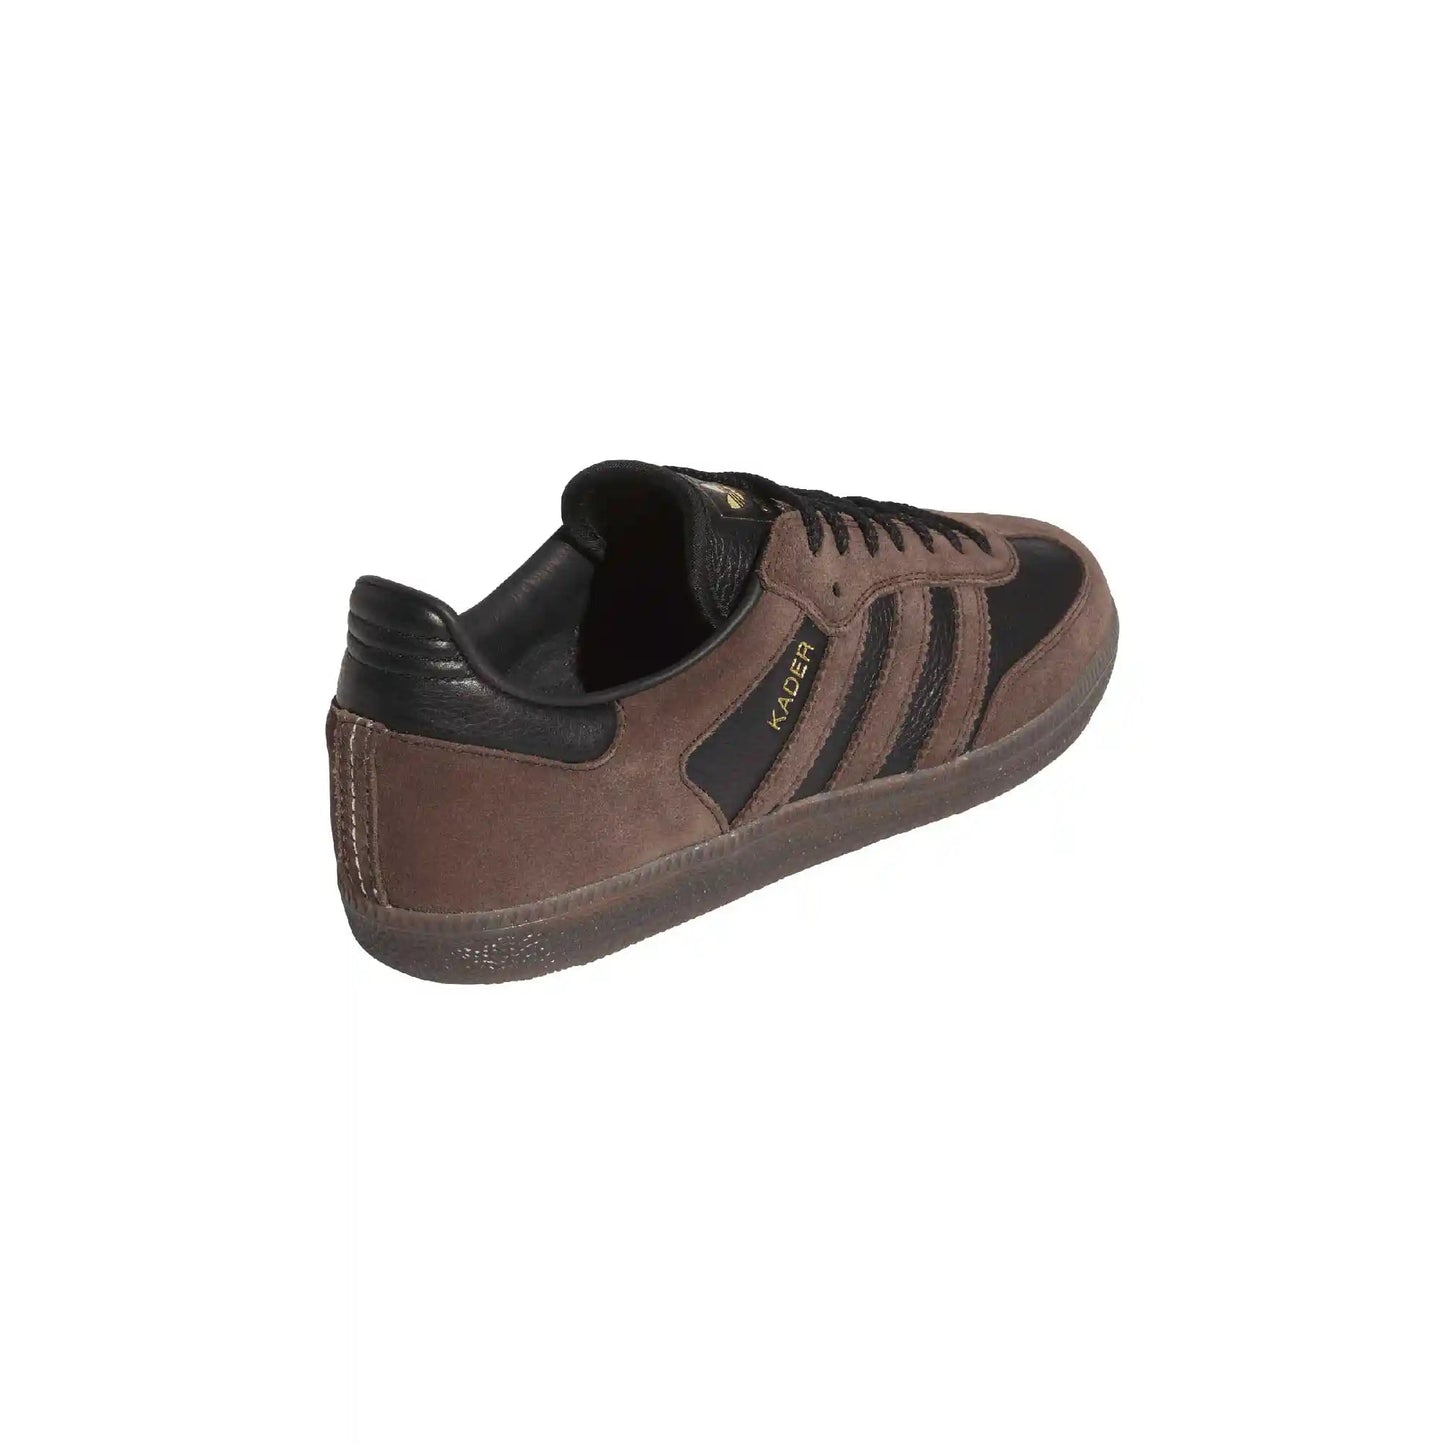 Adidas Samba ADV X Kader, core black/brown/gum - Tiki Room Skateboards - 3